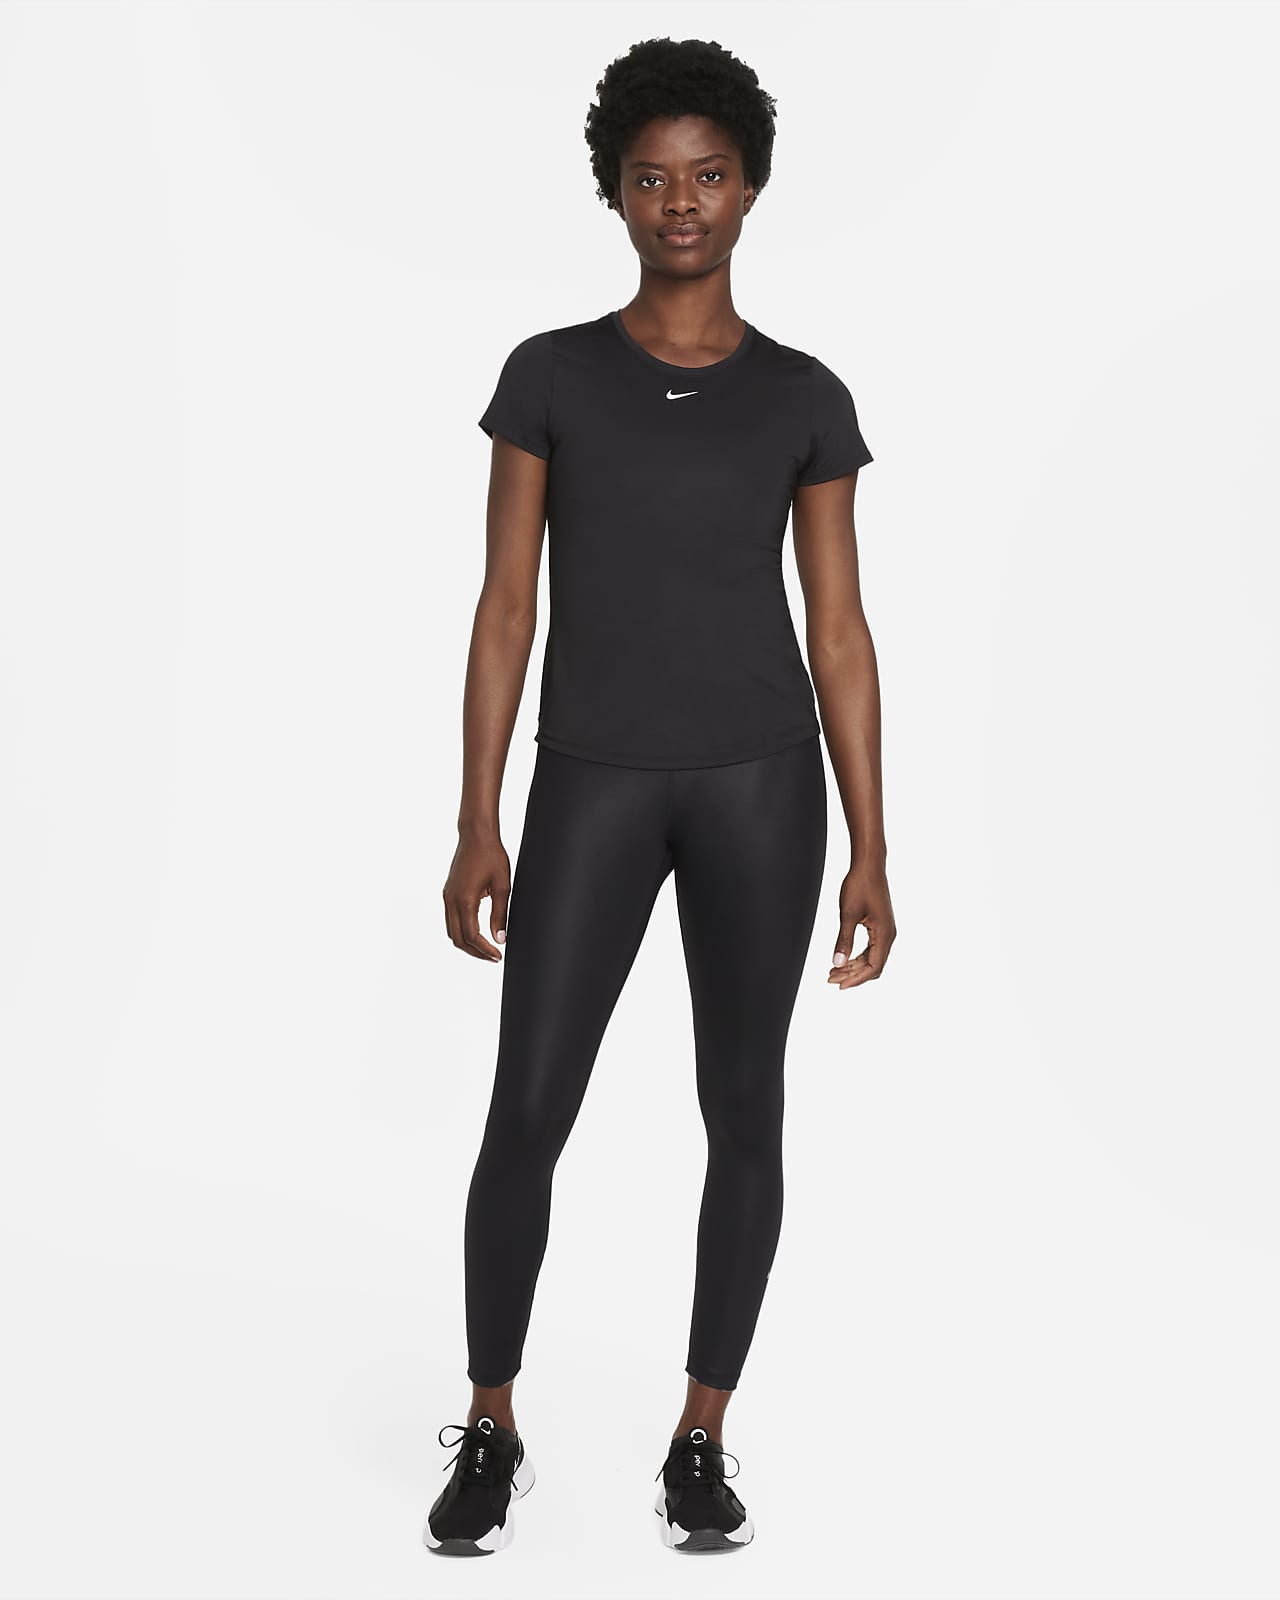 Nike Dri-FIT One Women's Slim-Fit Short-Sleeve Top. Nike LU